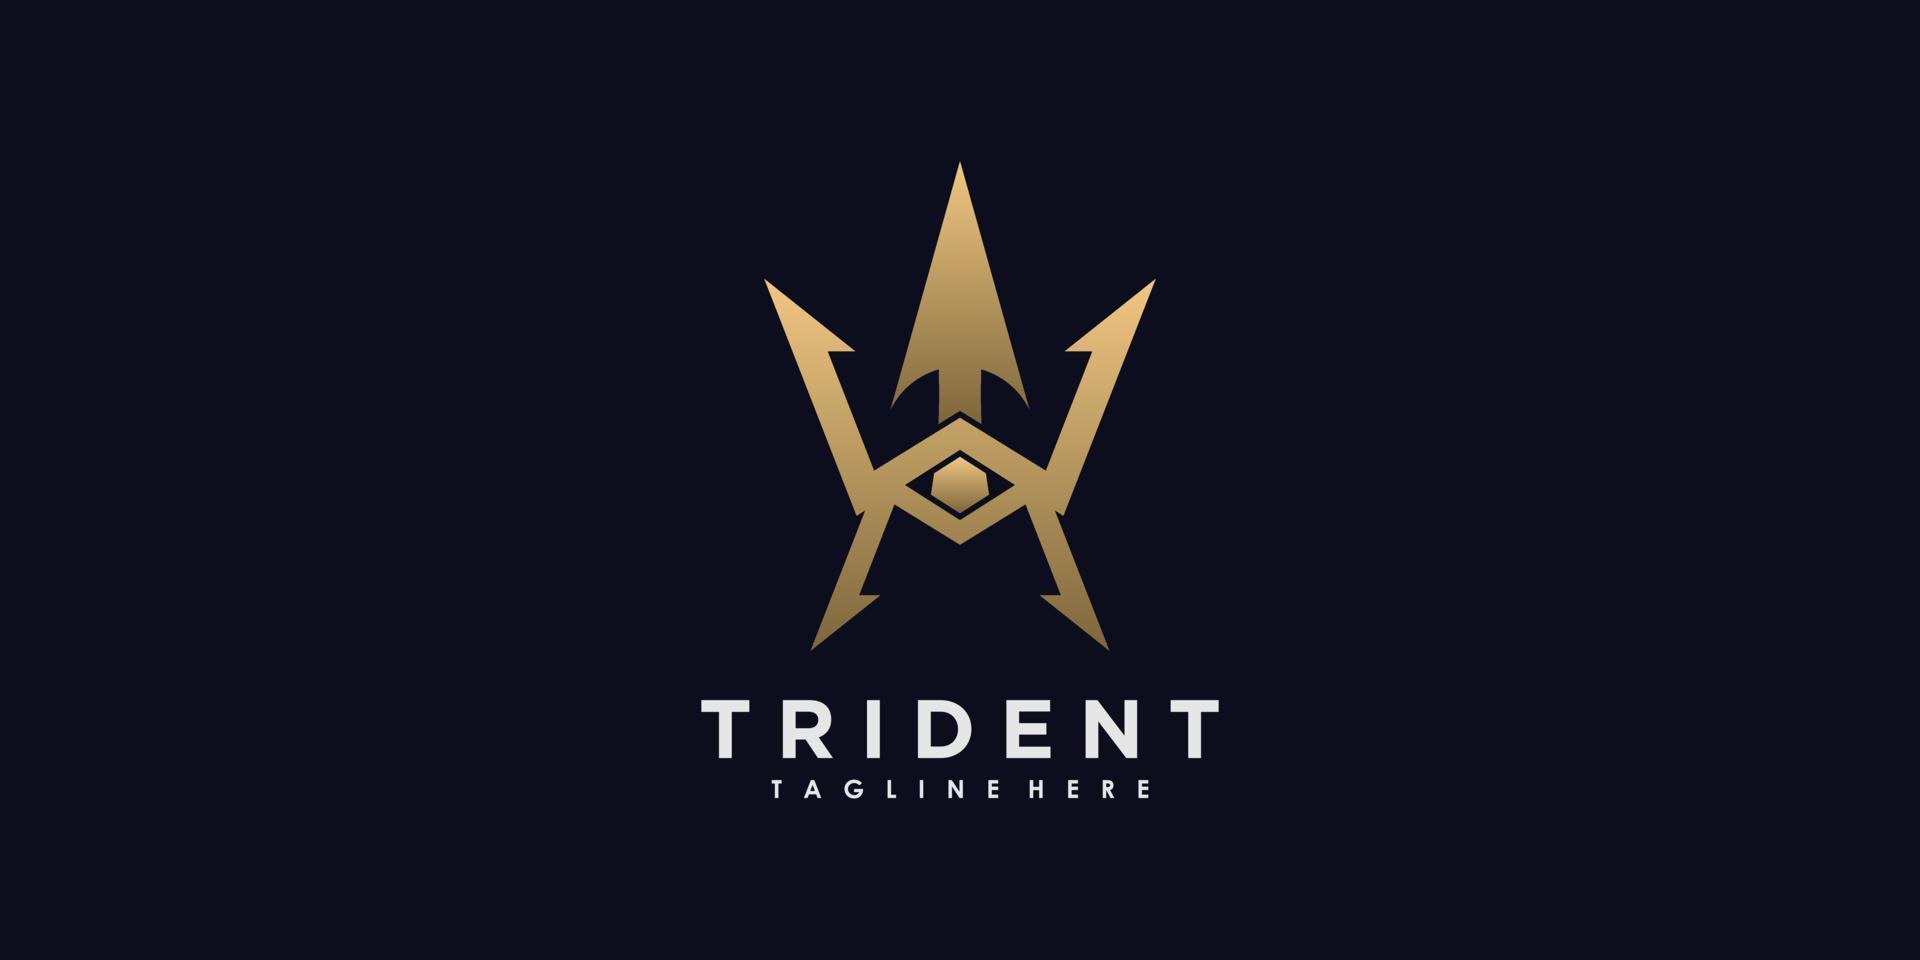 trident logo design vector with illustration creative concept